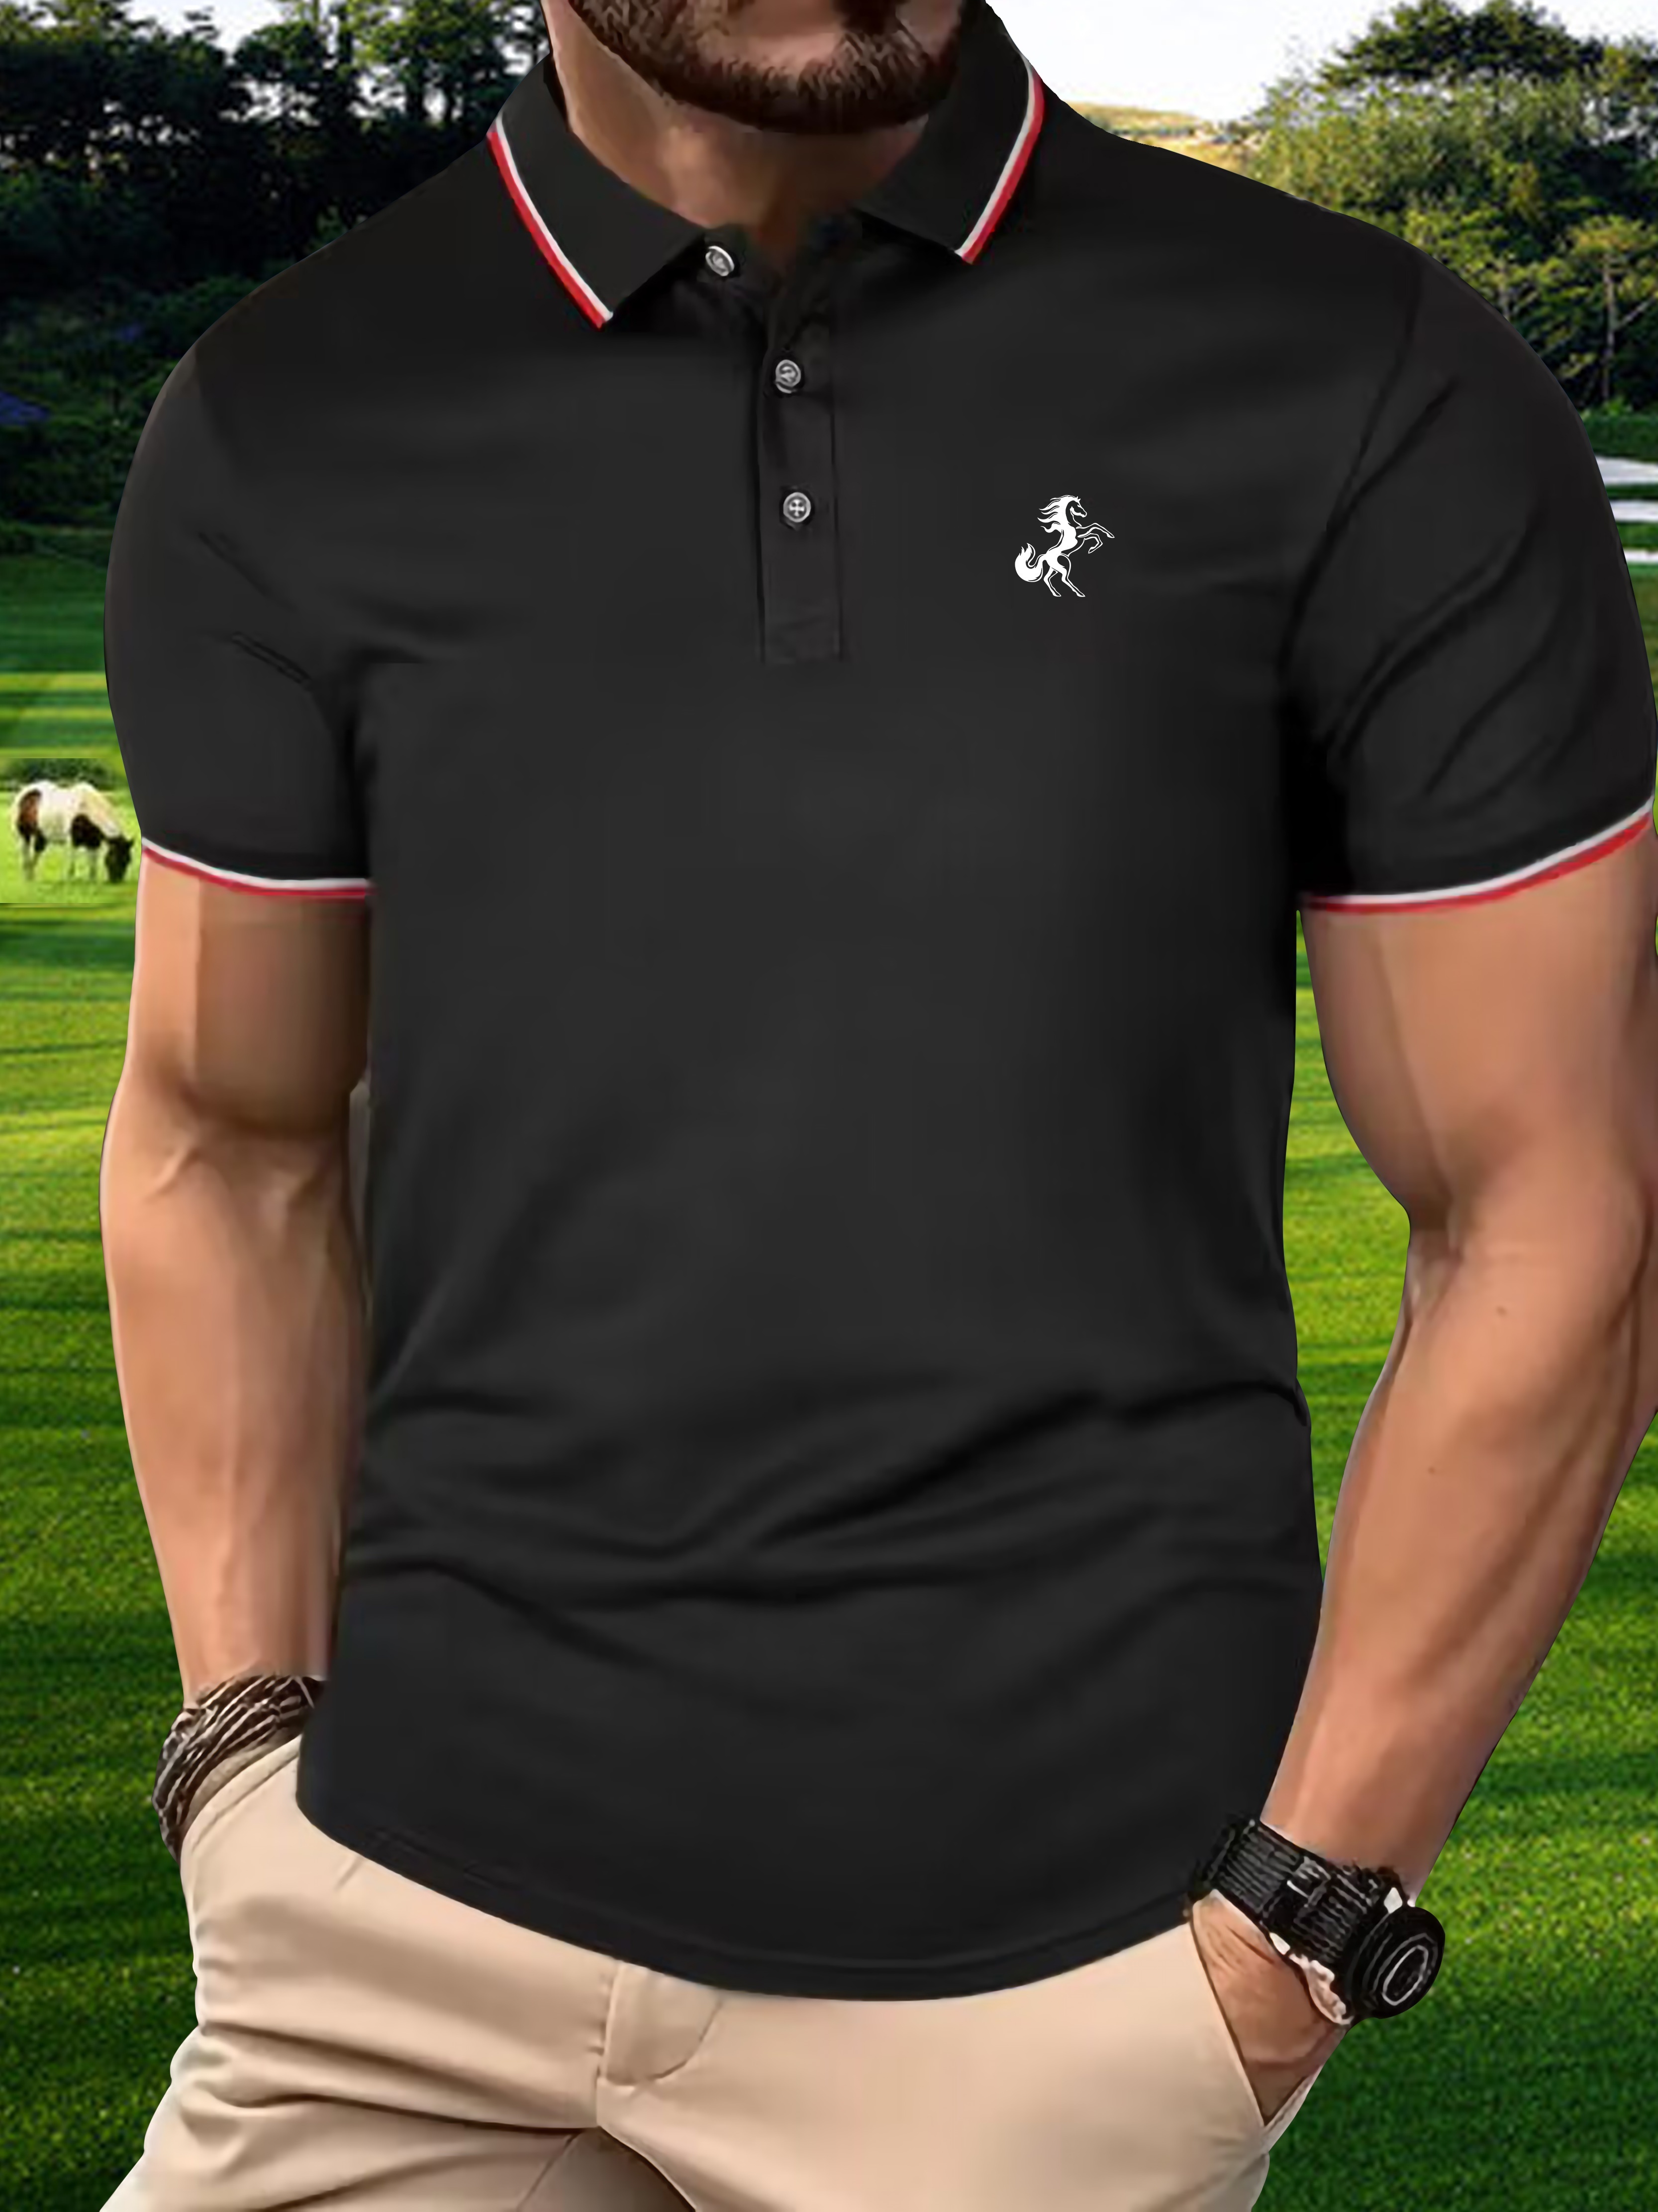 Men's Golf Shirts.